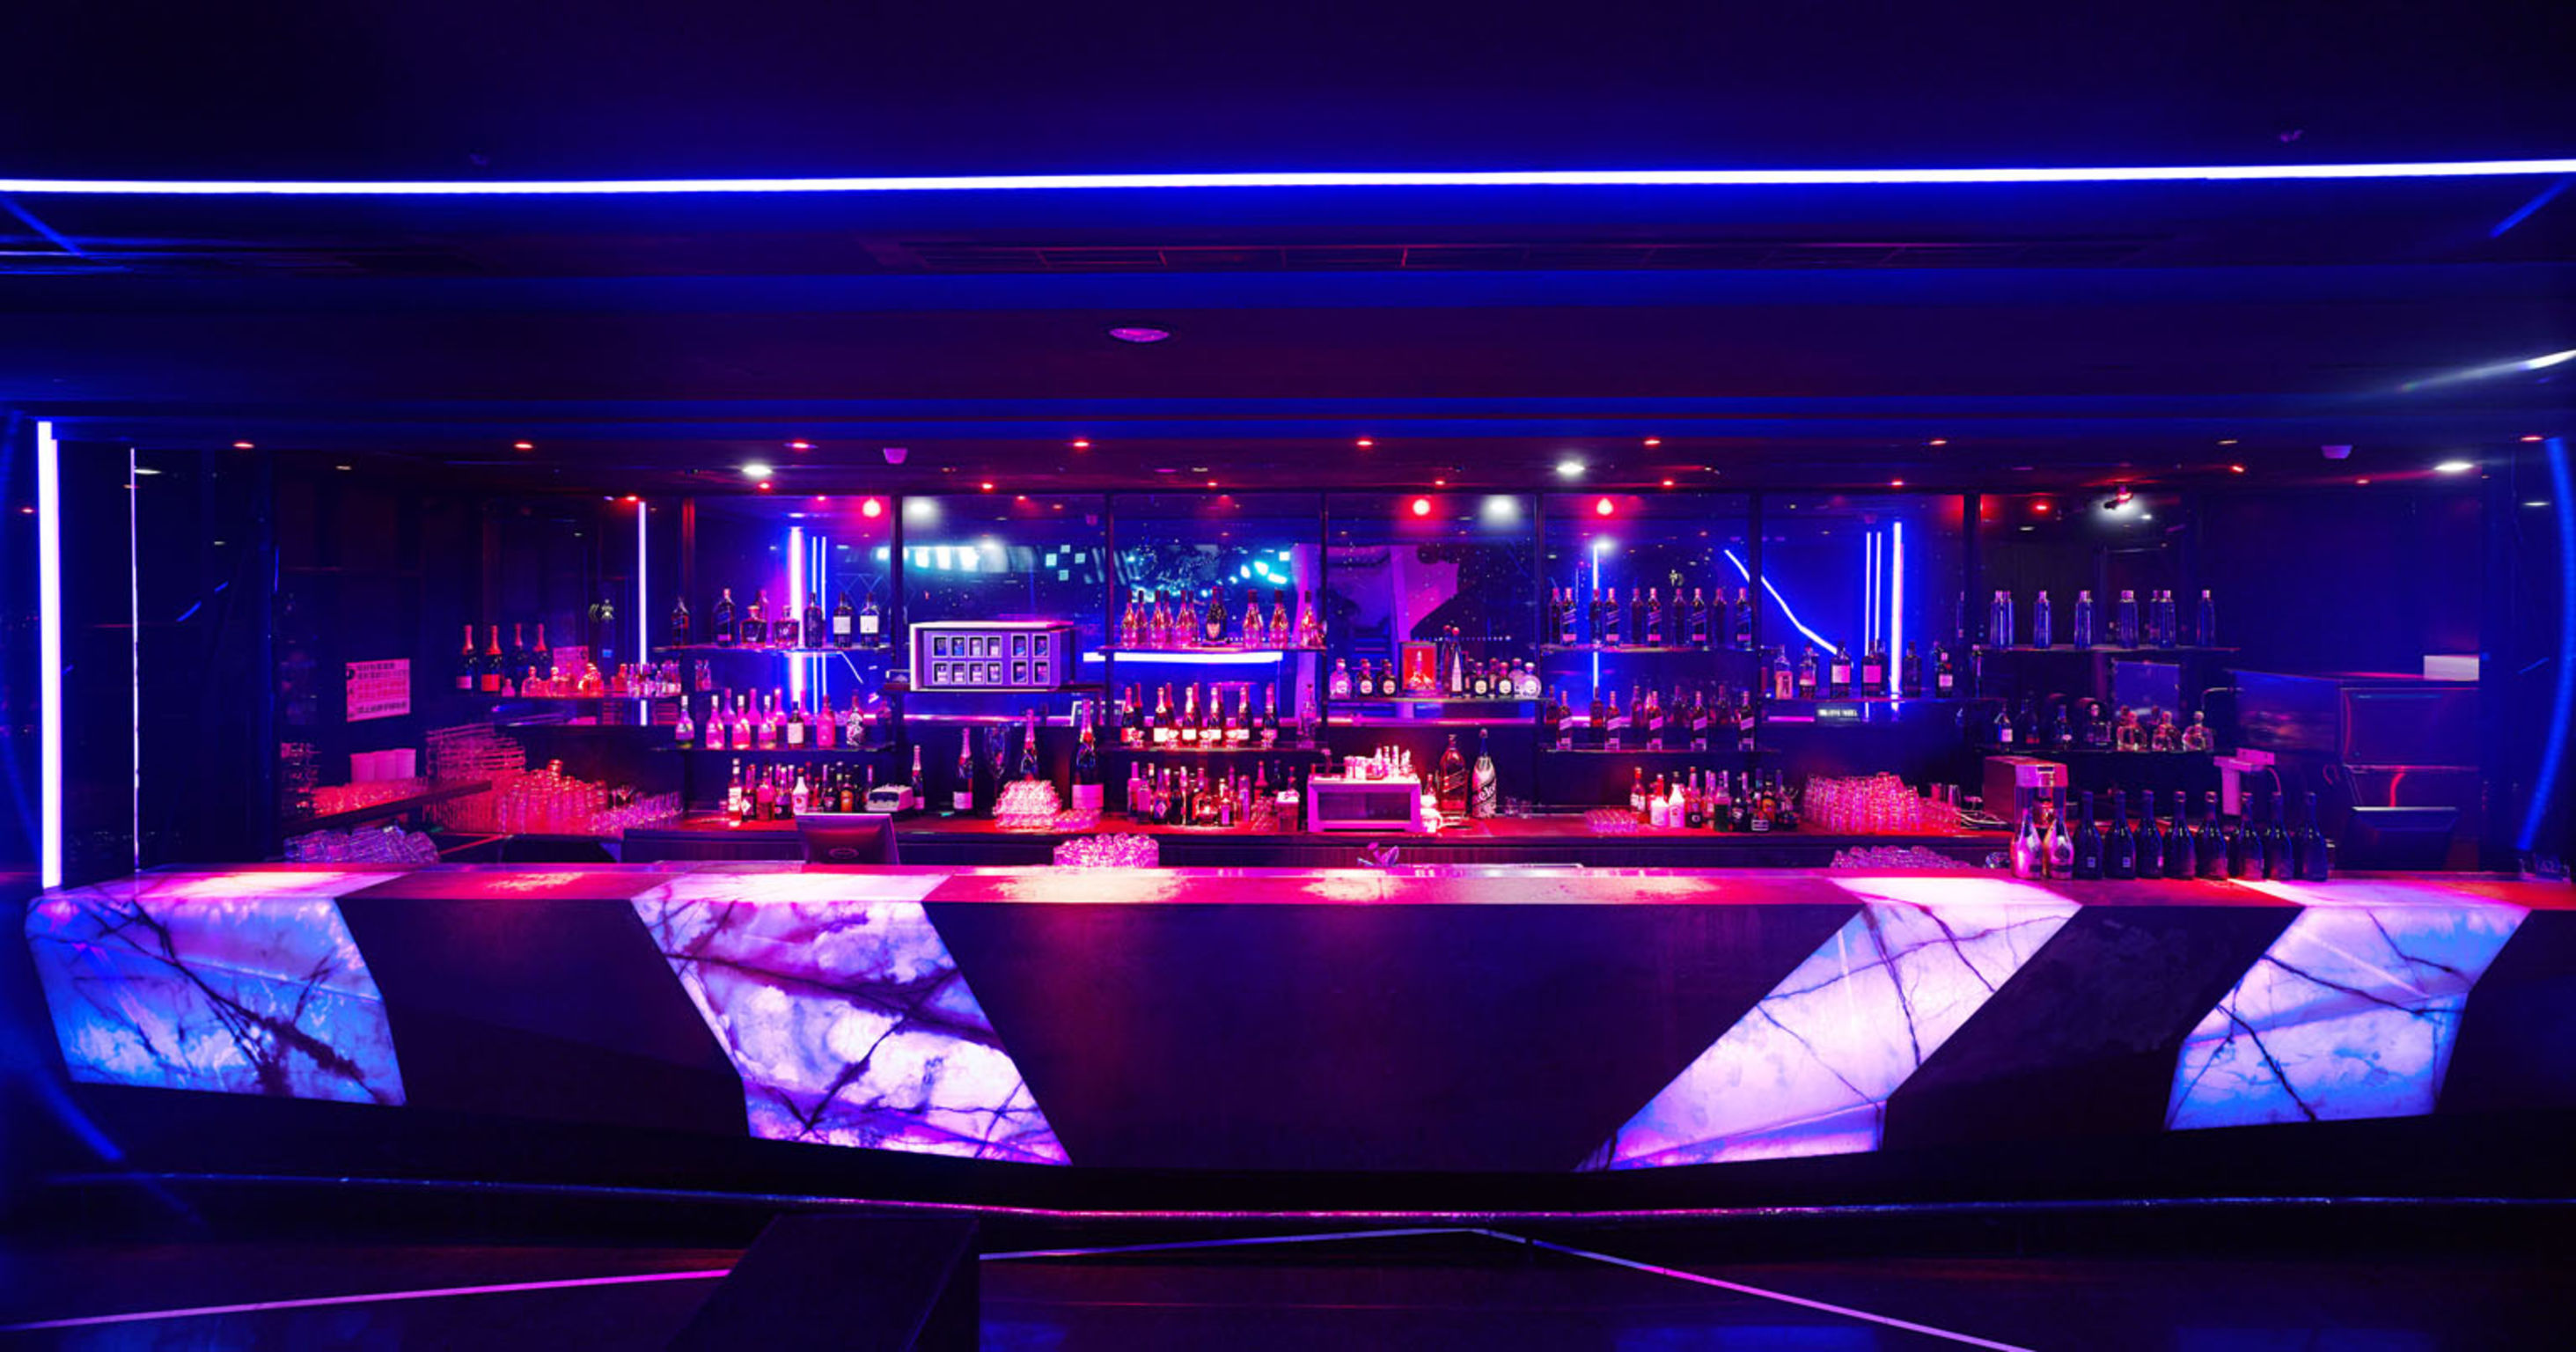 Omni night club Taipei - Entry - iF WORLD DESIGN GUIDE